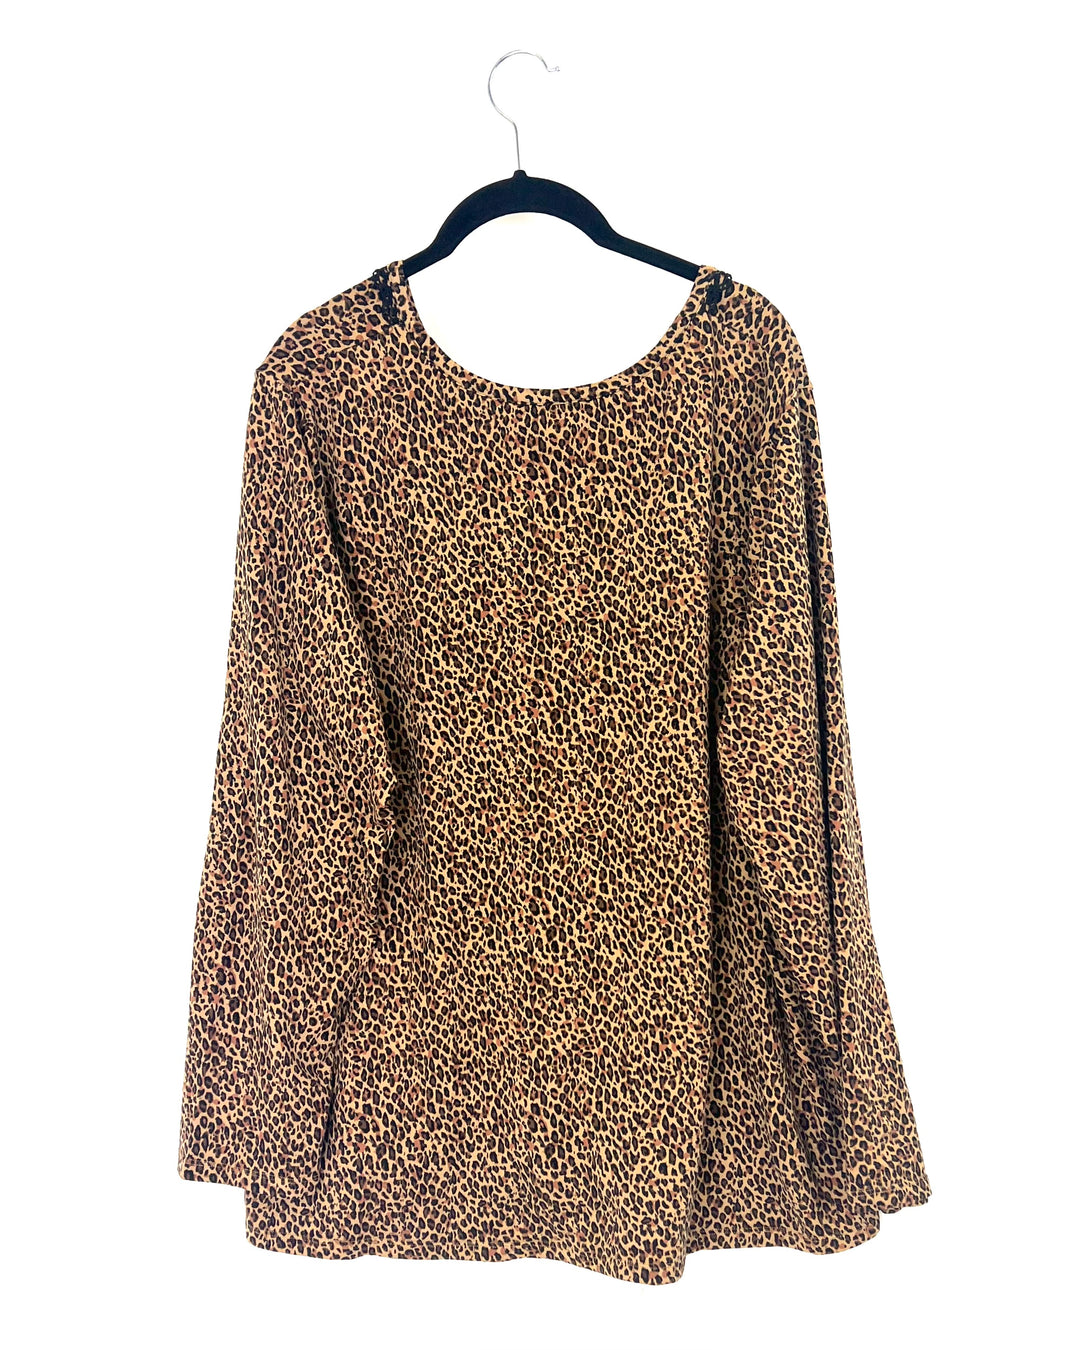 Cheetah Print Pajama Set - 1X